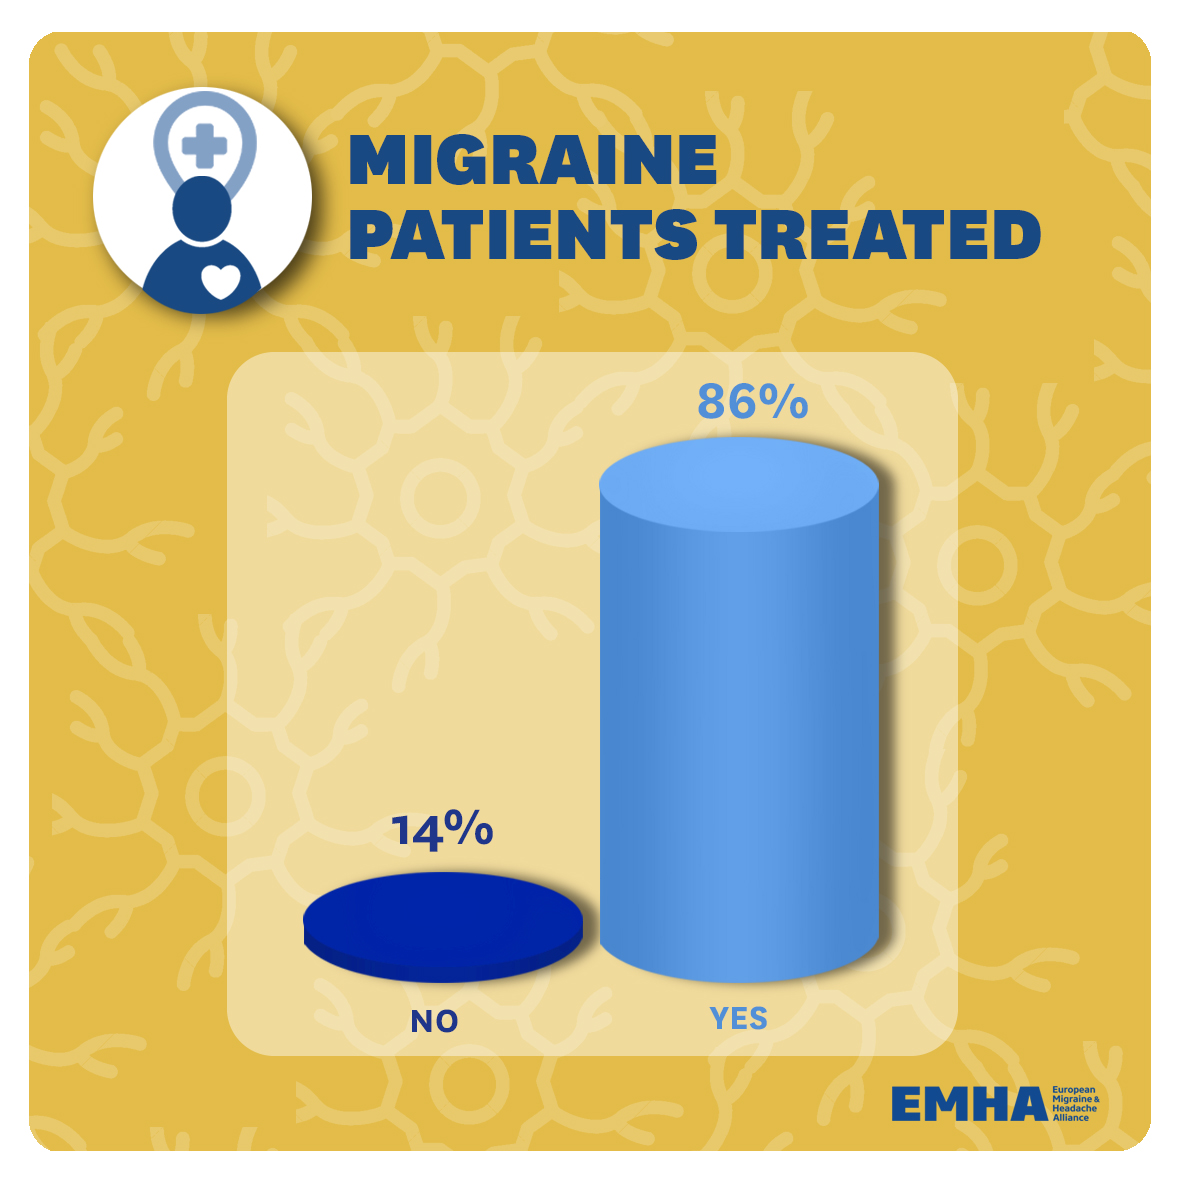 16.-Migraine-patients-treated